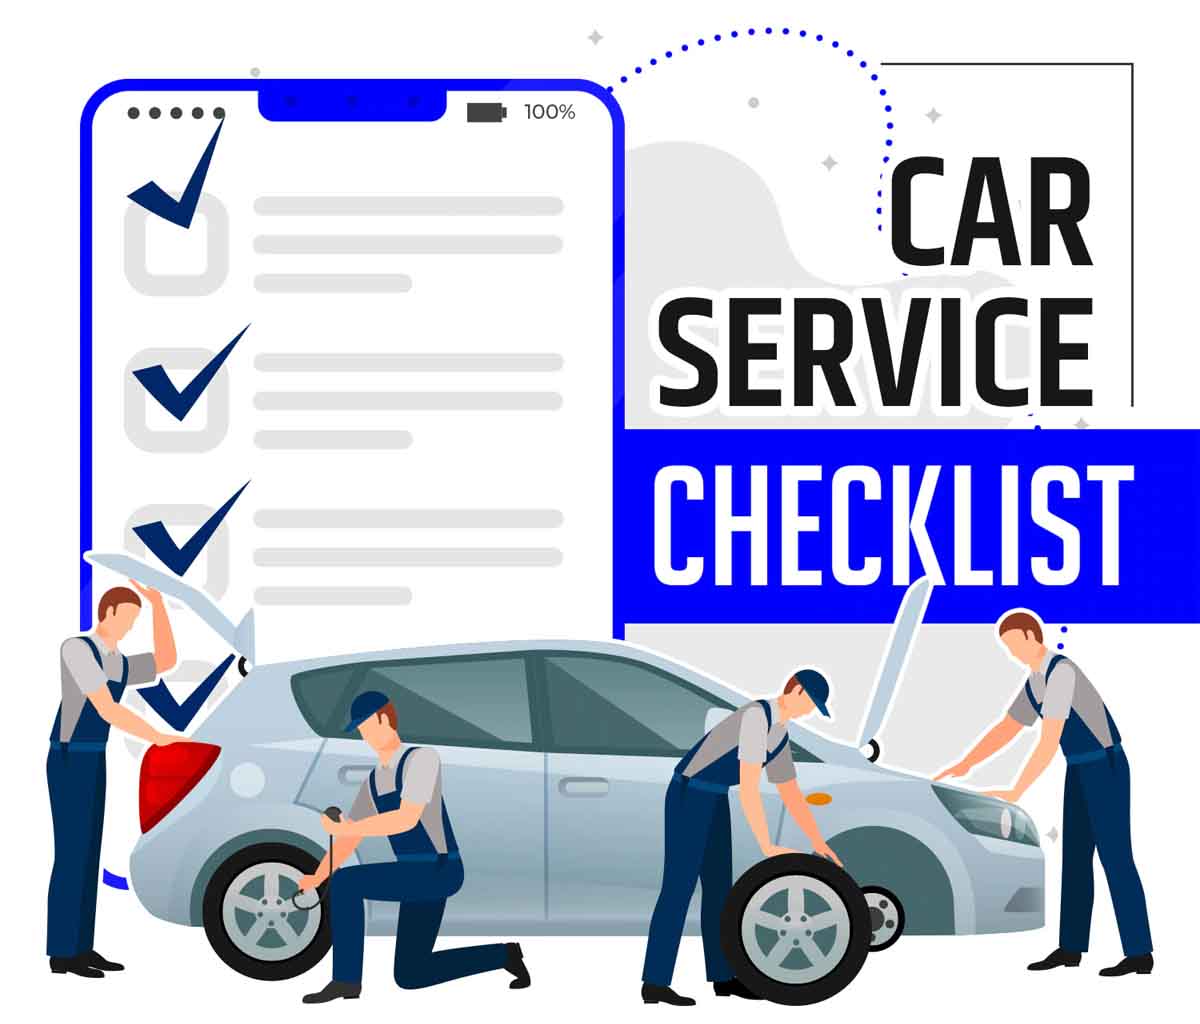 Car Service Checklist